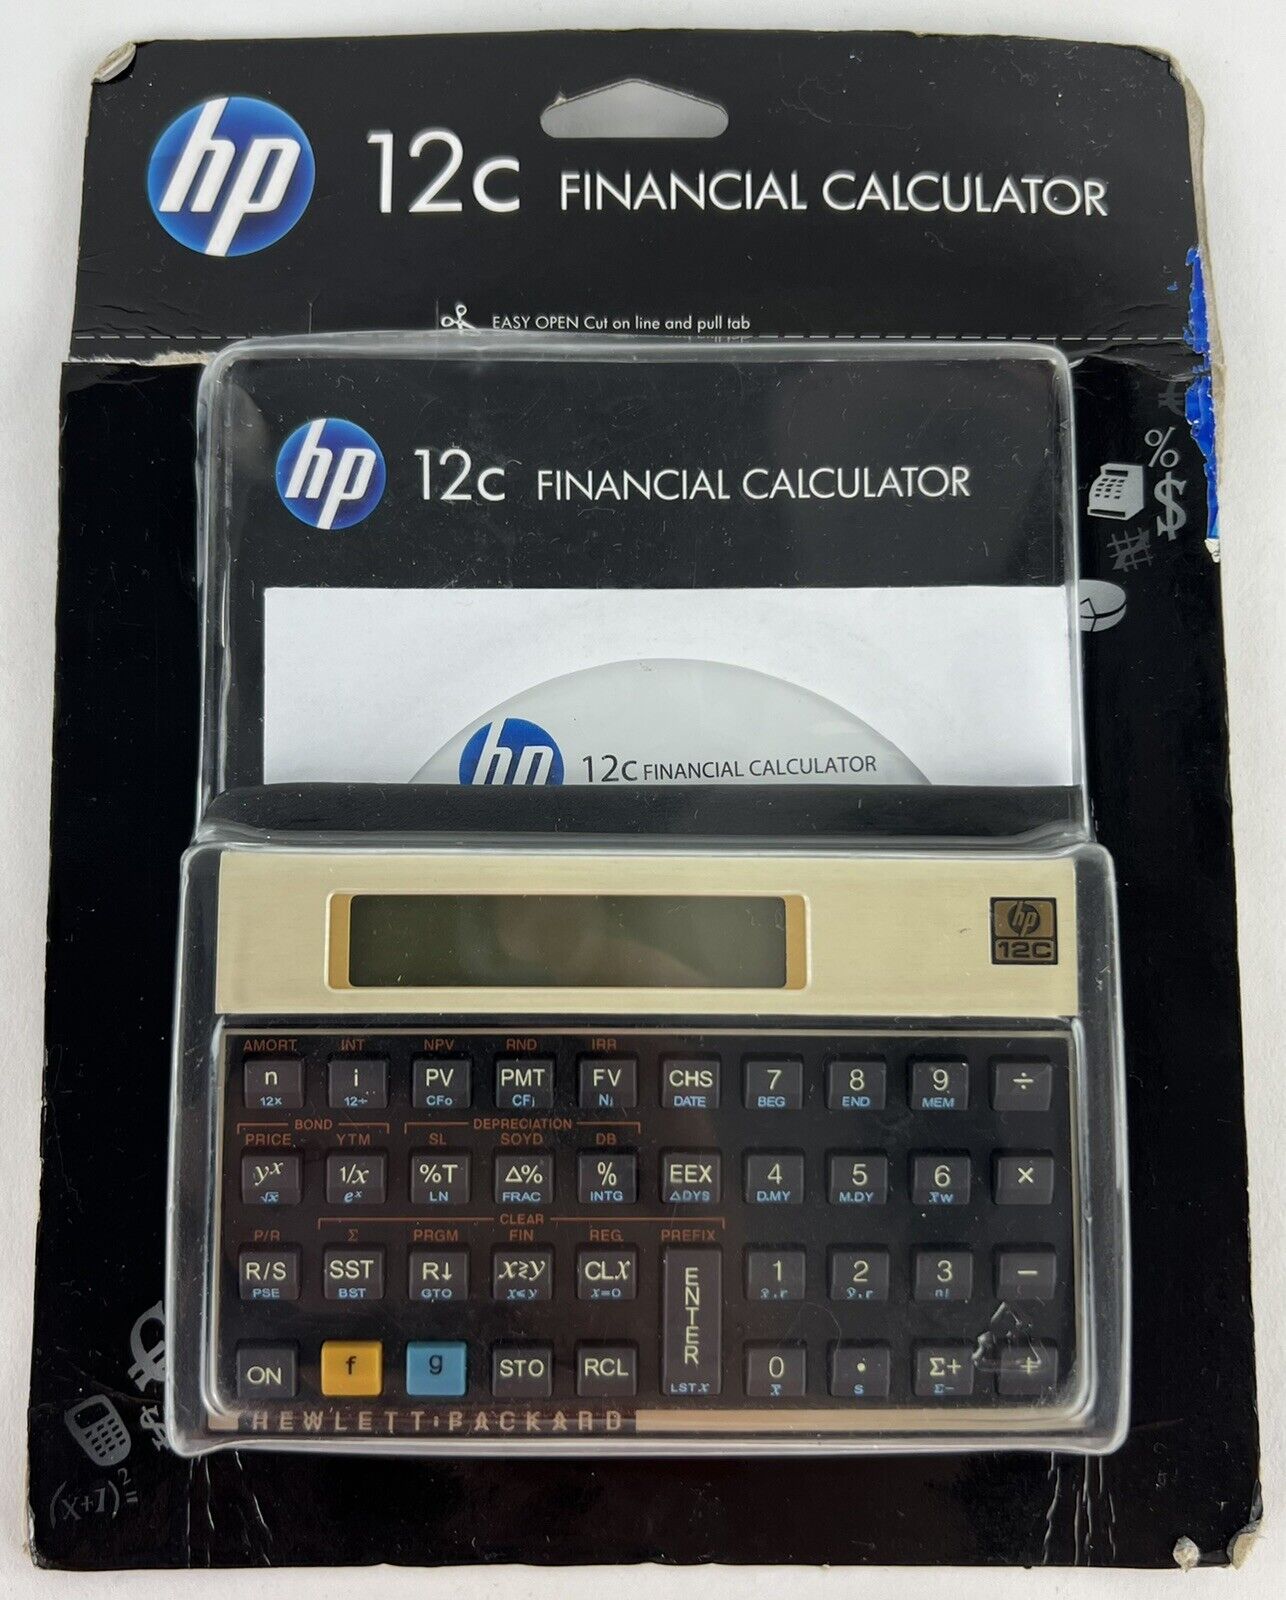 Hewlett-Packard free shipping HP 12C Cheap mail order shopping Financial Calculator Black Box New Open